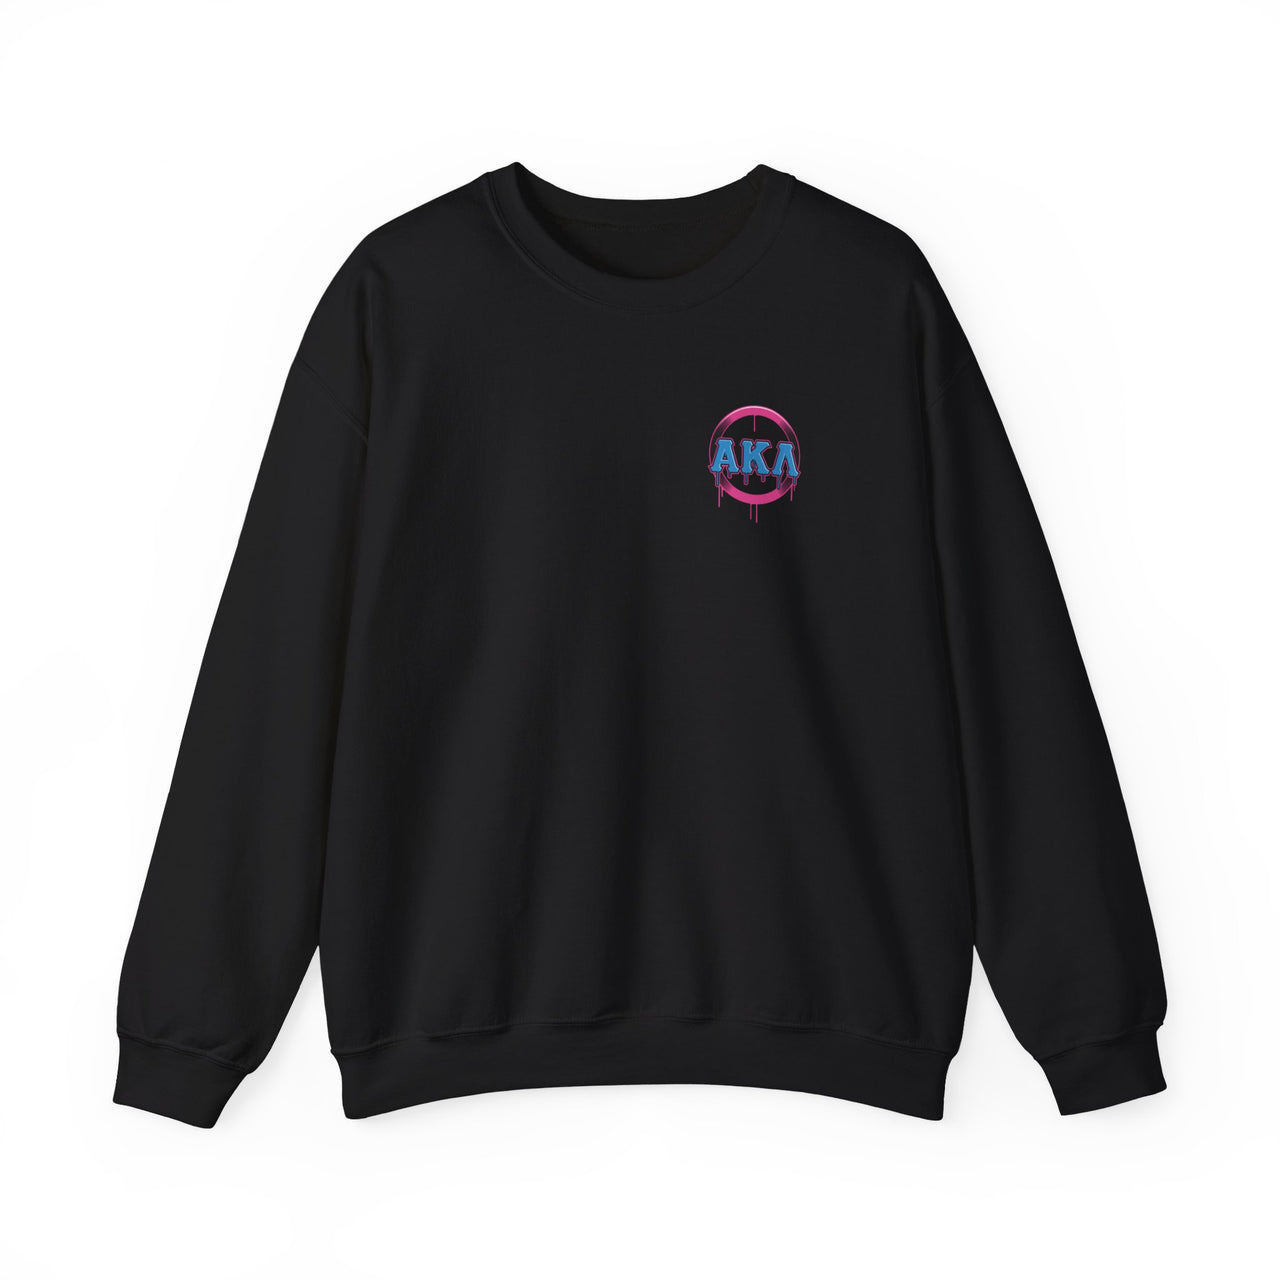 Alpha Kappa Lambda Graphic Crewneck Sweatshirt | Liberty Rebel